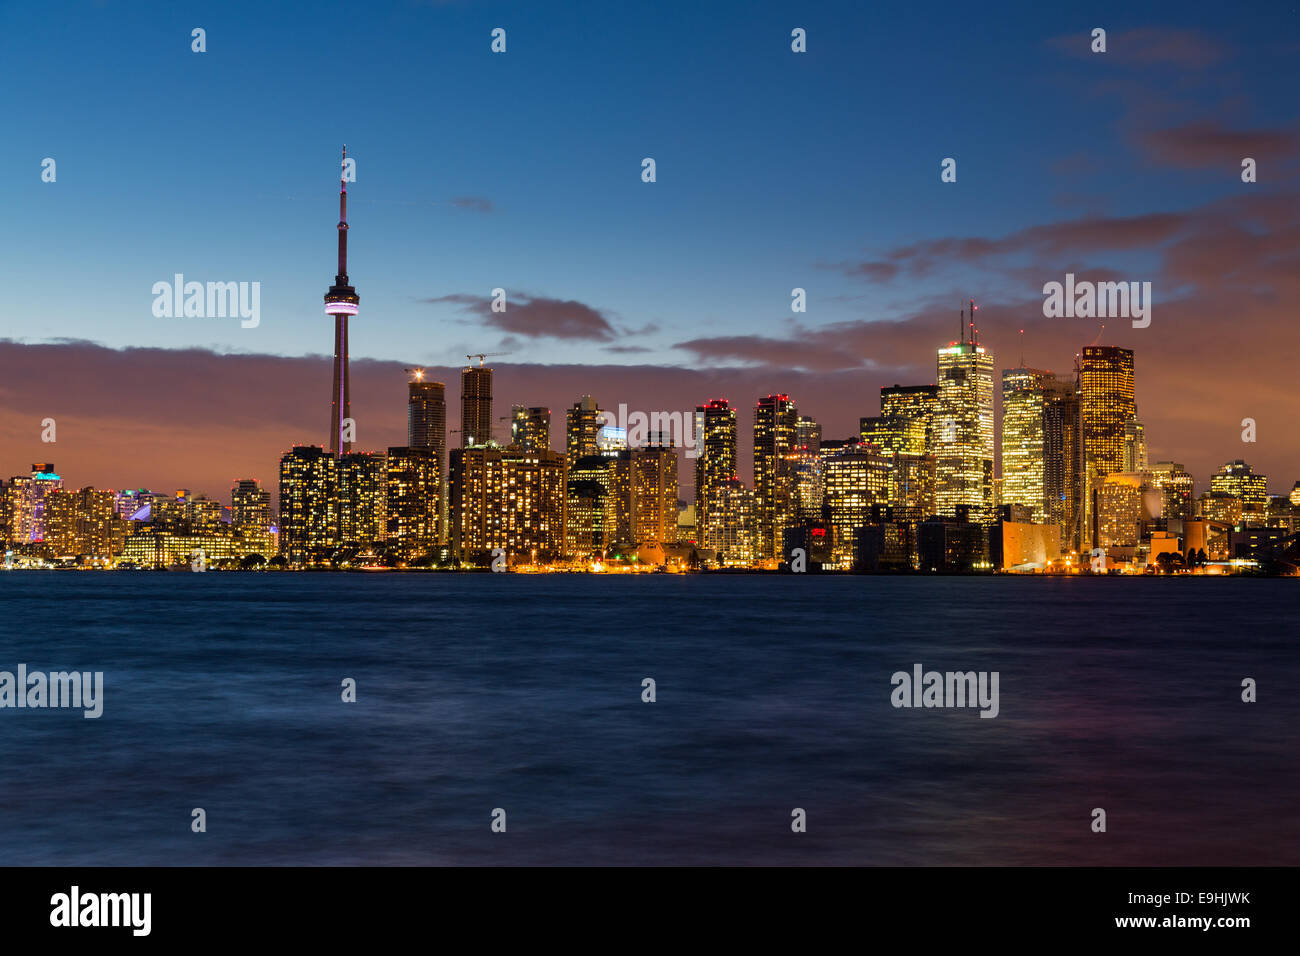 Skyline of Toronto at night after dusk Stock Photo